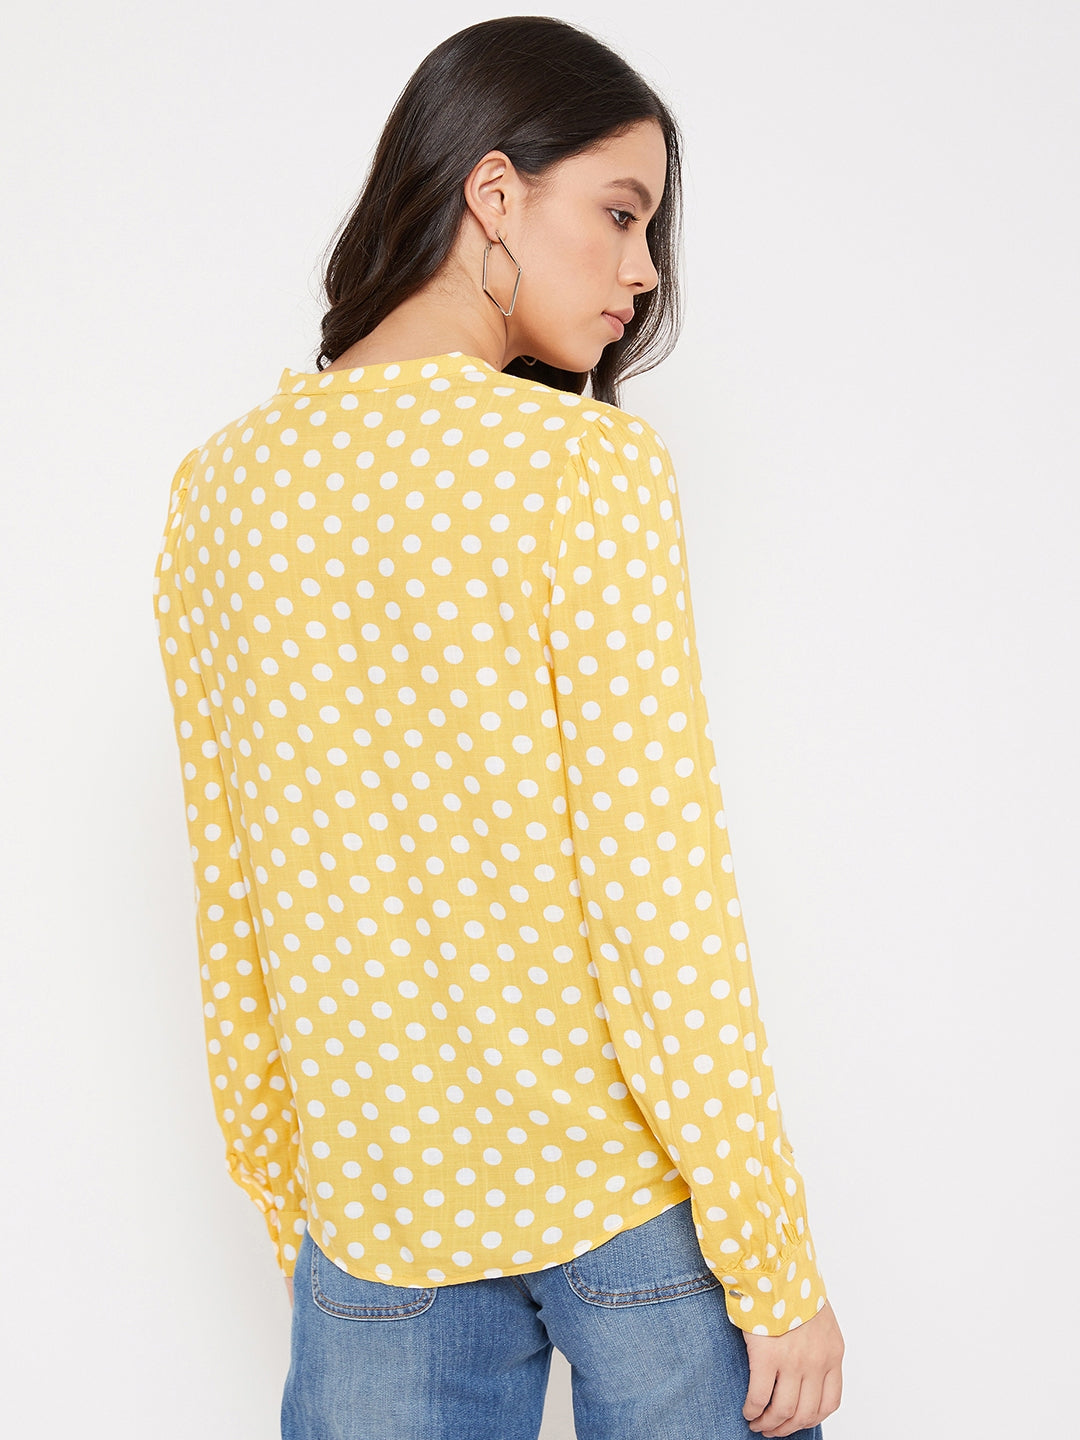 Yellow Polka Dots Tops - Women Tops